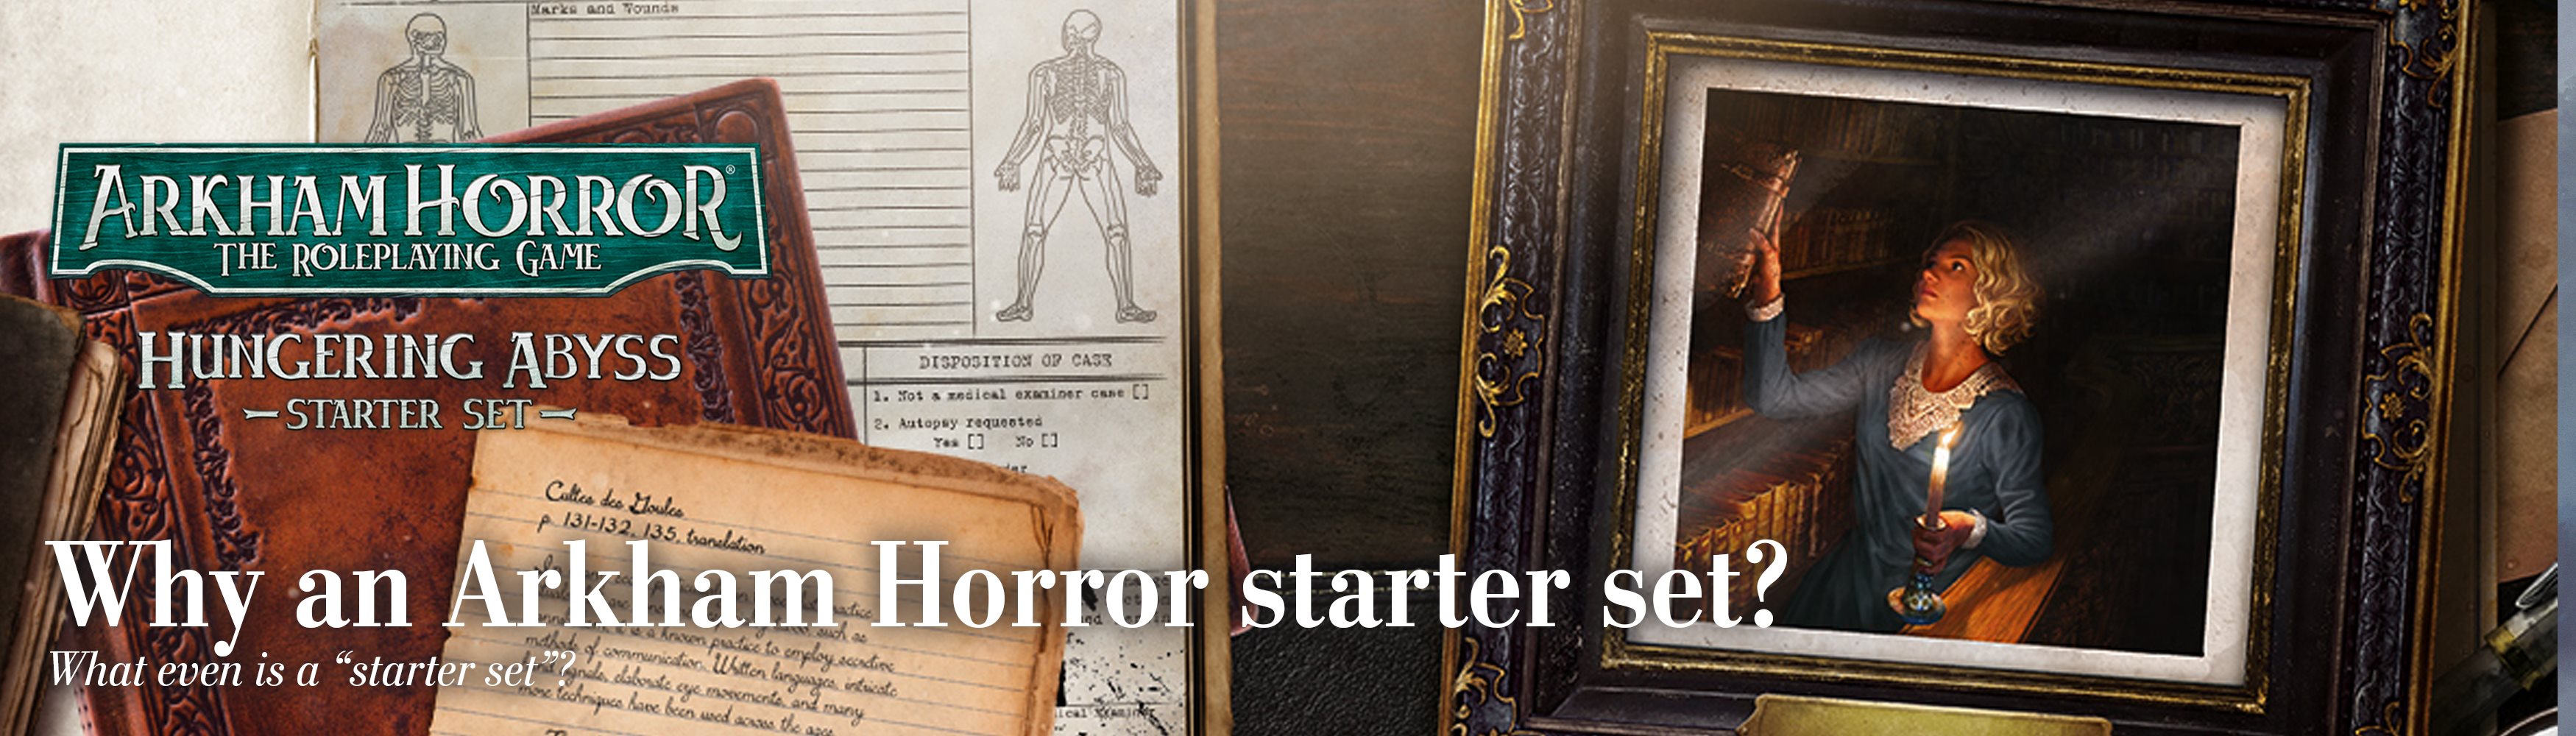 Why an Arkham Horror starter set? What even is a “starter set”?